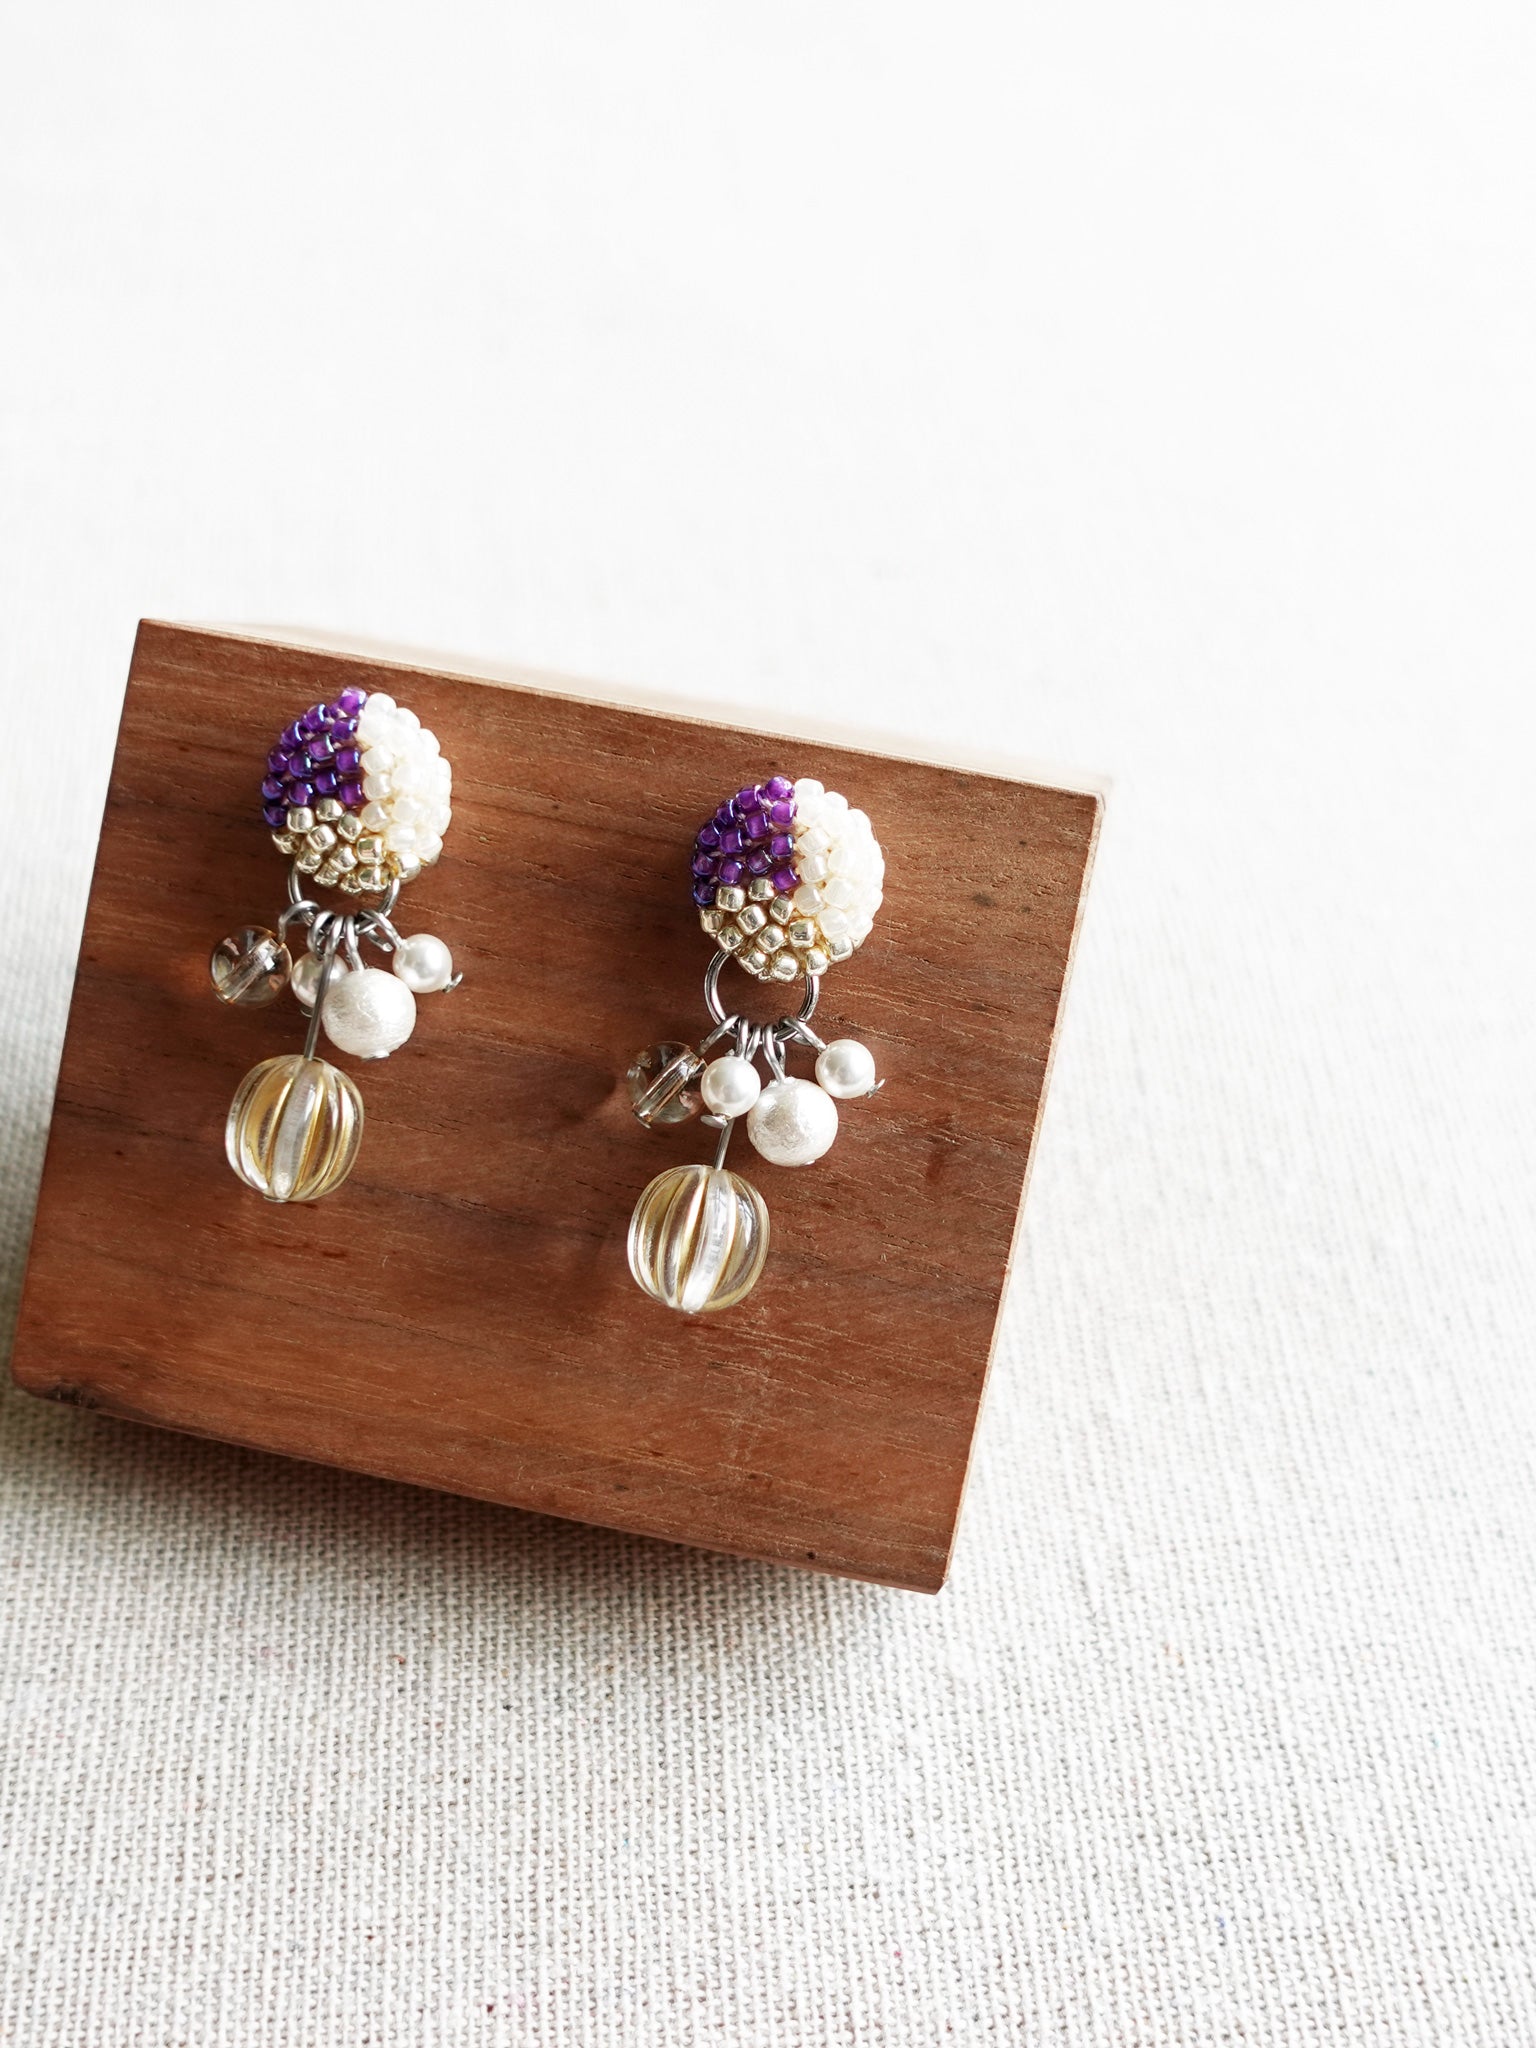 Arcadia Trio Earrings in Royal Purple Display Right